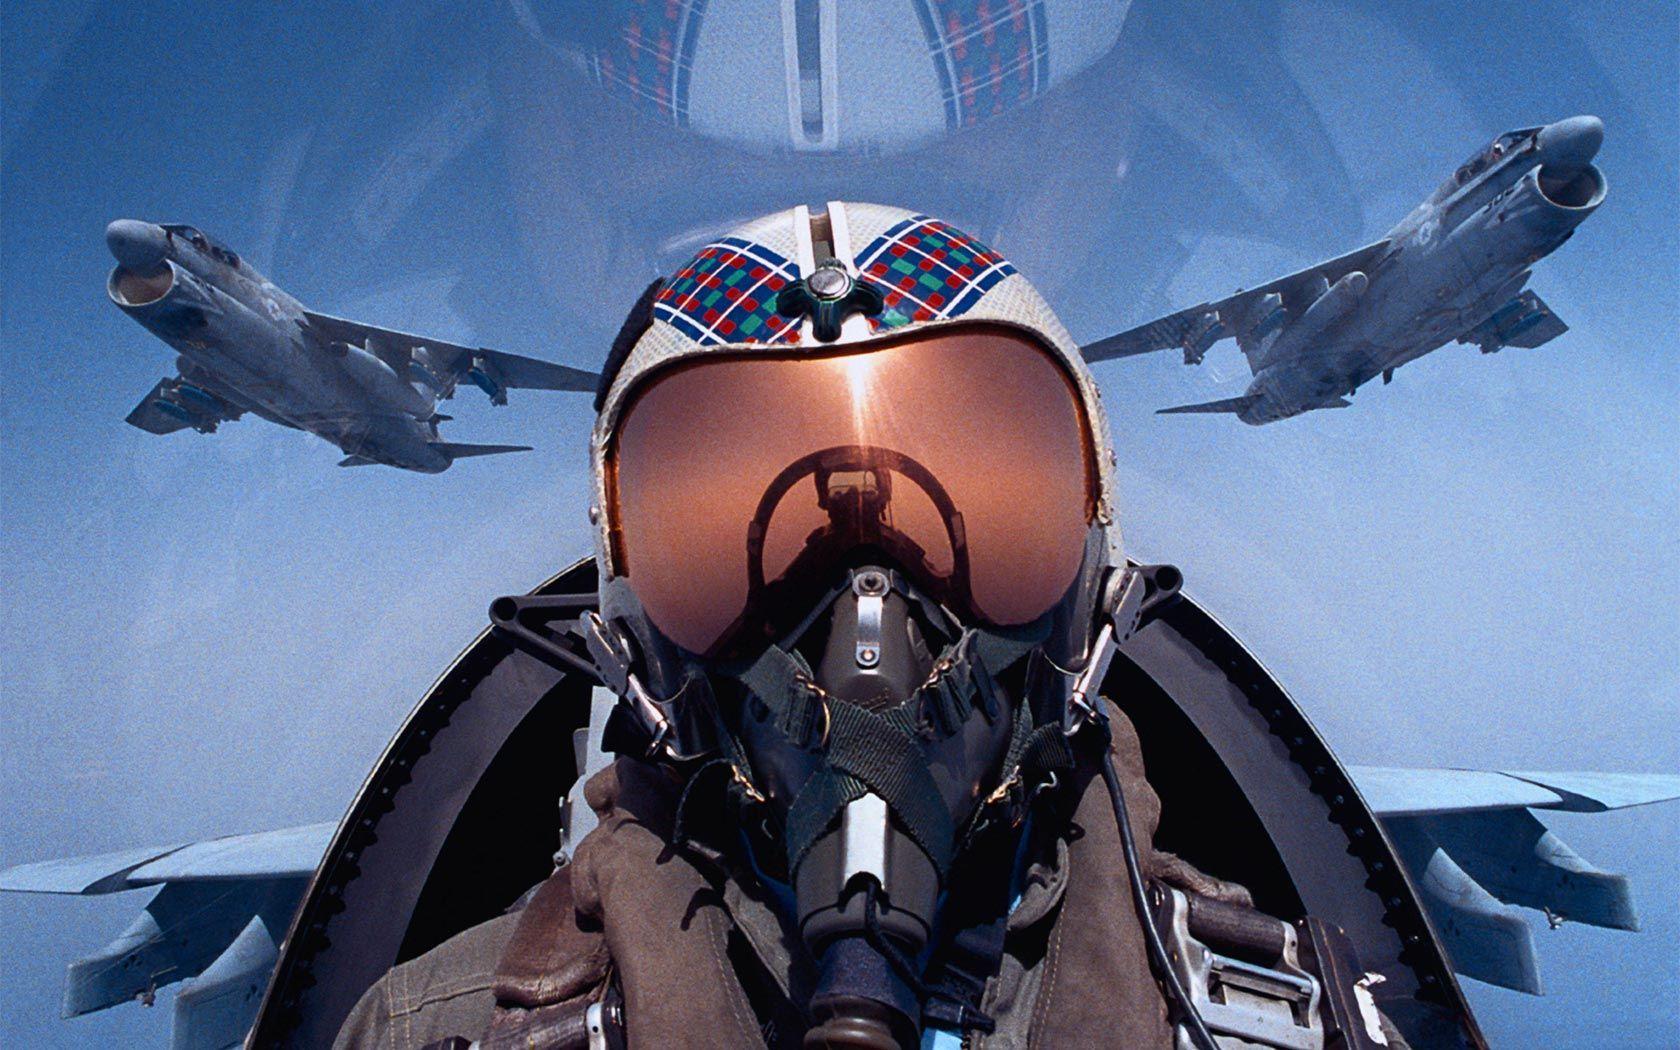 Fighter Jet Pilot HD iPhone Wallpaper. Fighter pilot, Fighter jets, Military aircraft